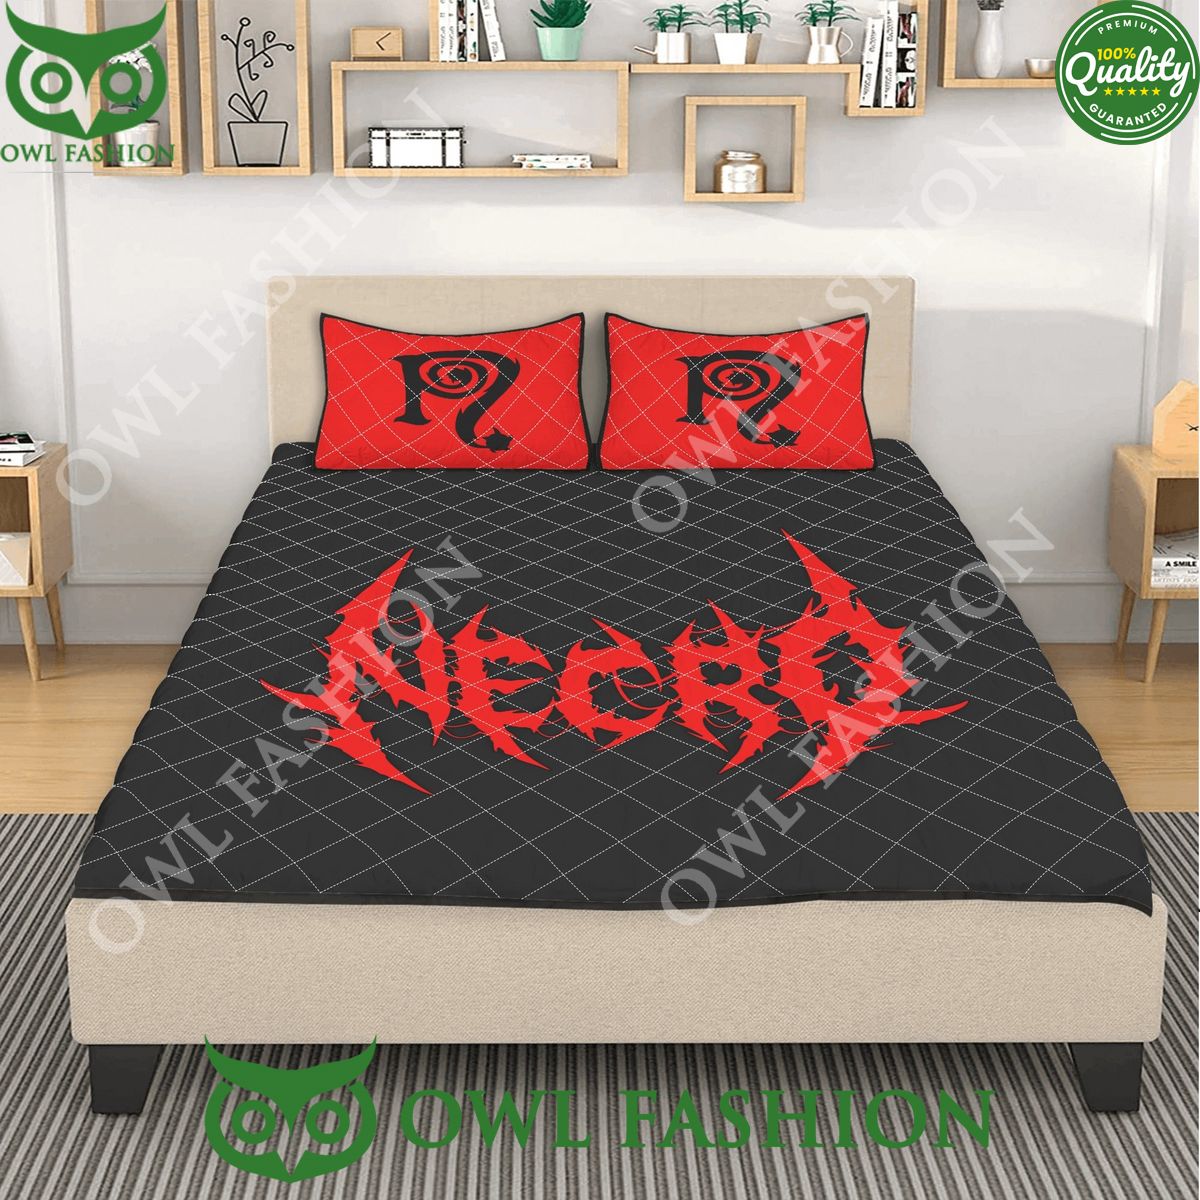 Necro Quilt Bed Set You are always amazing